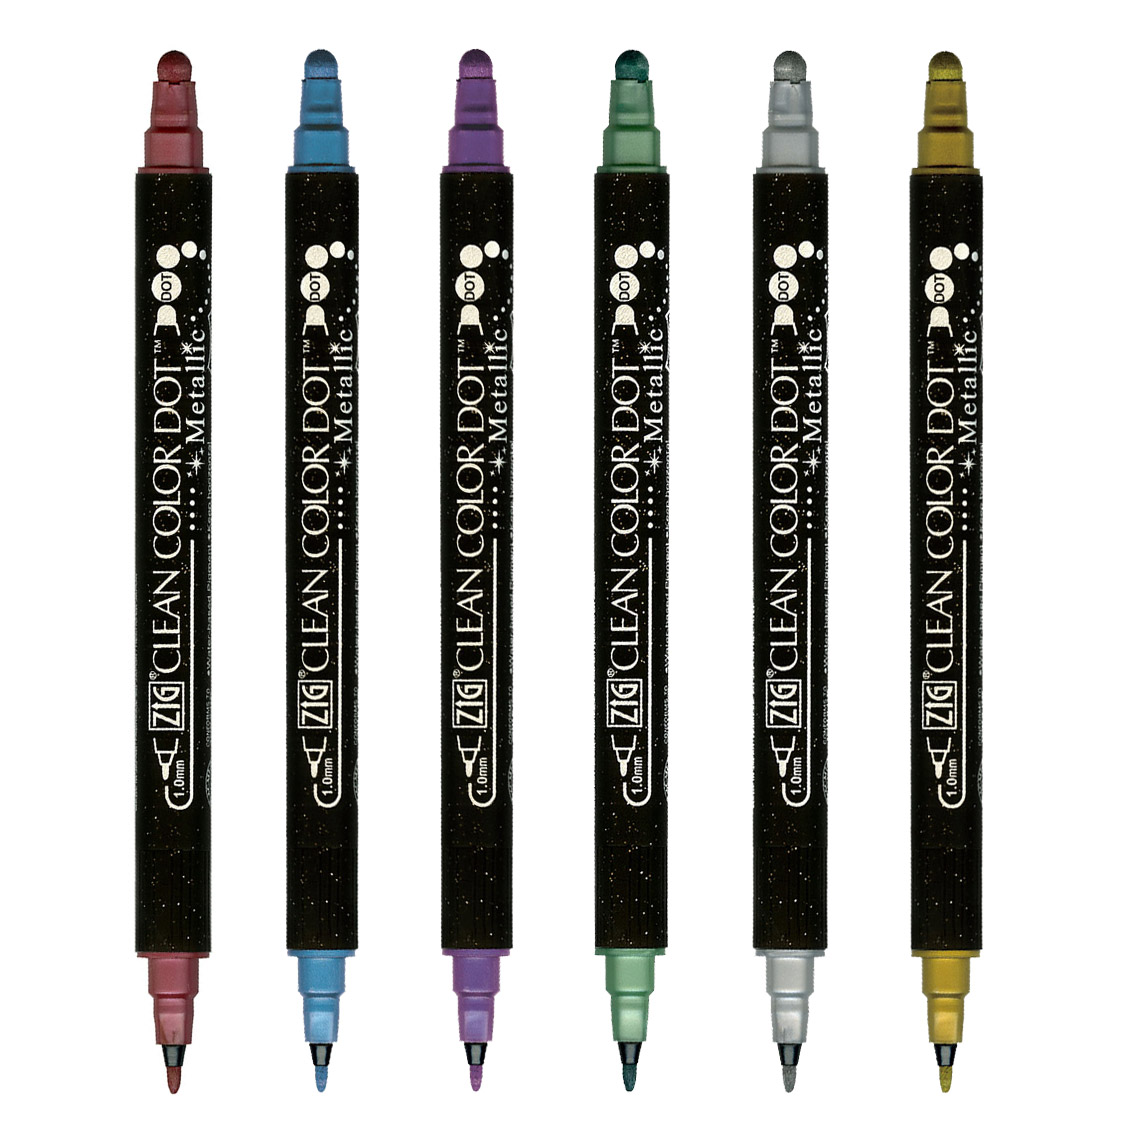 Kuretake ZIG Clean Color DOT markers 4 colors set, Dual tip, for Bullet  Journals, Crafts, Illustration, Lettering 0.5mm fine tip on one end and a